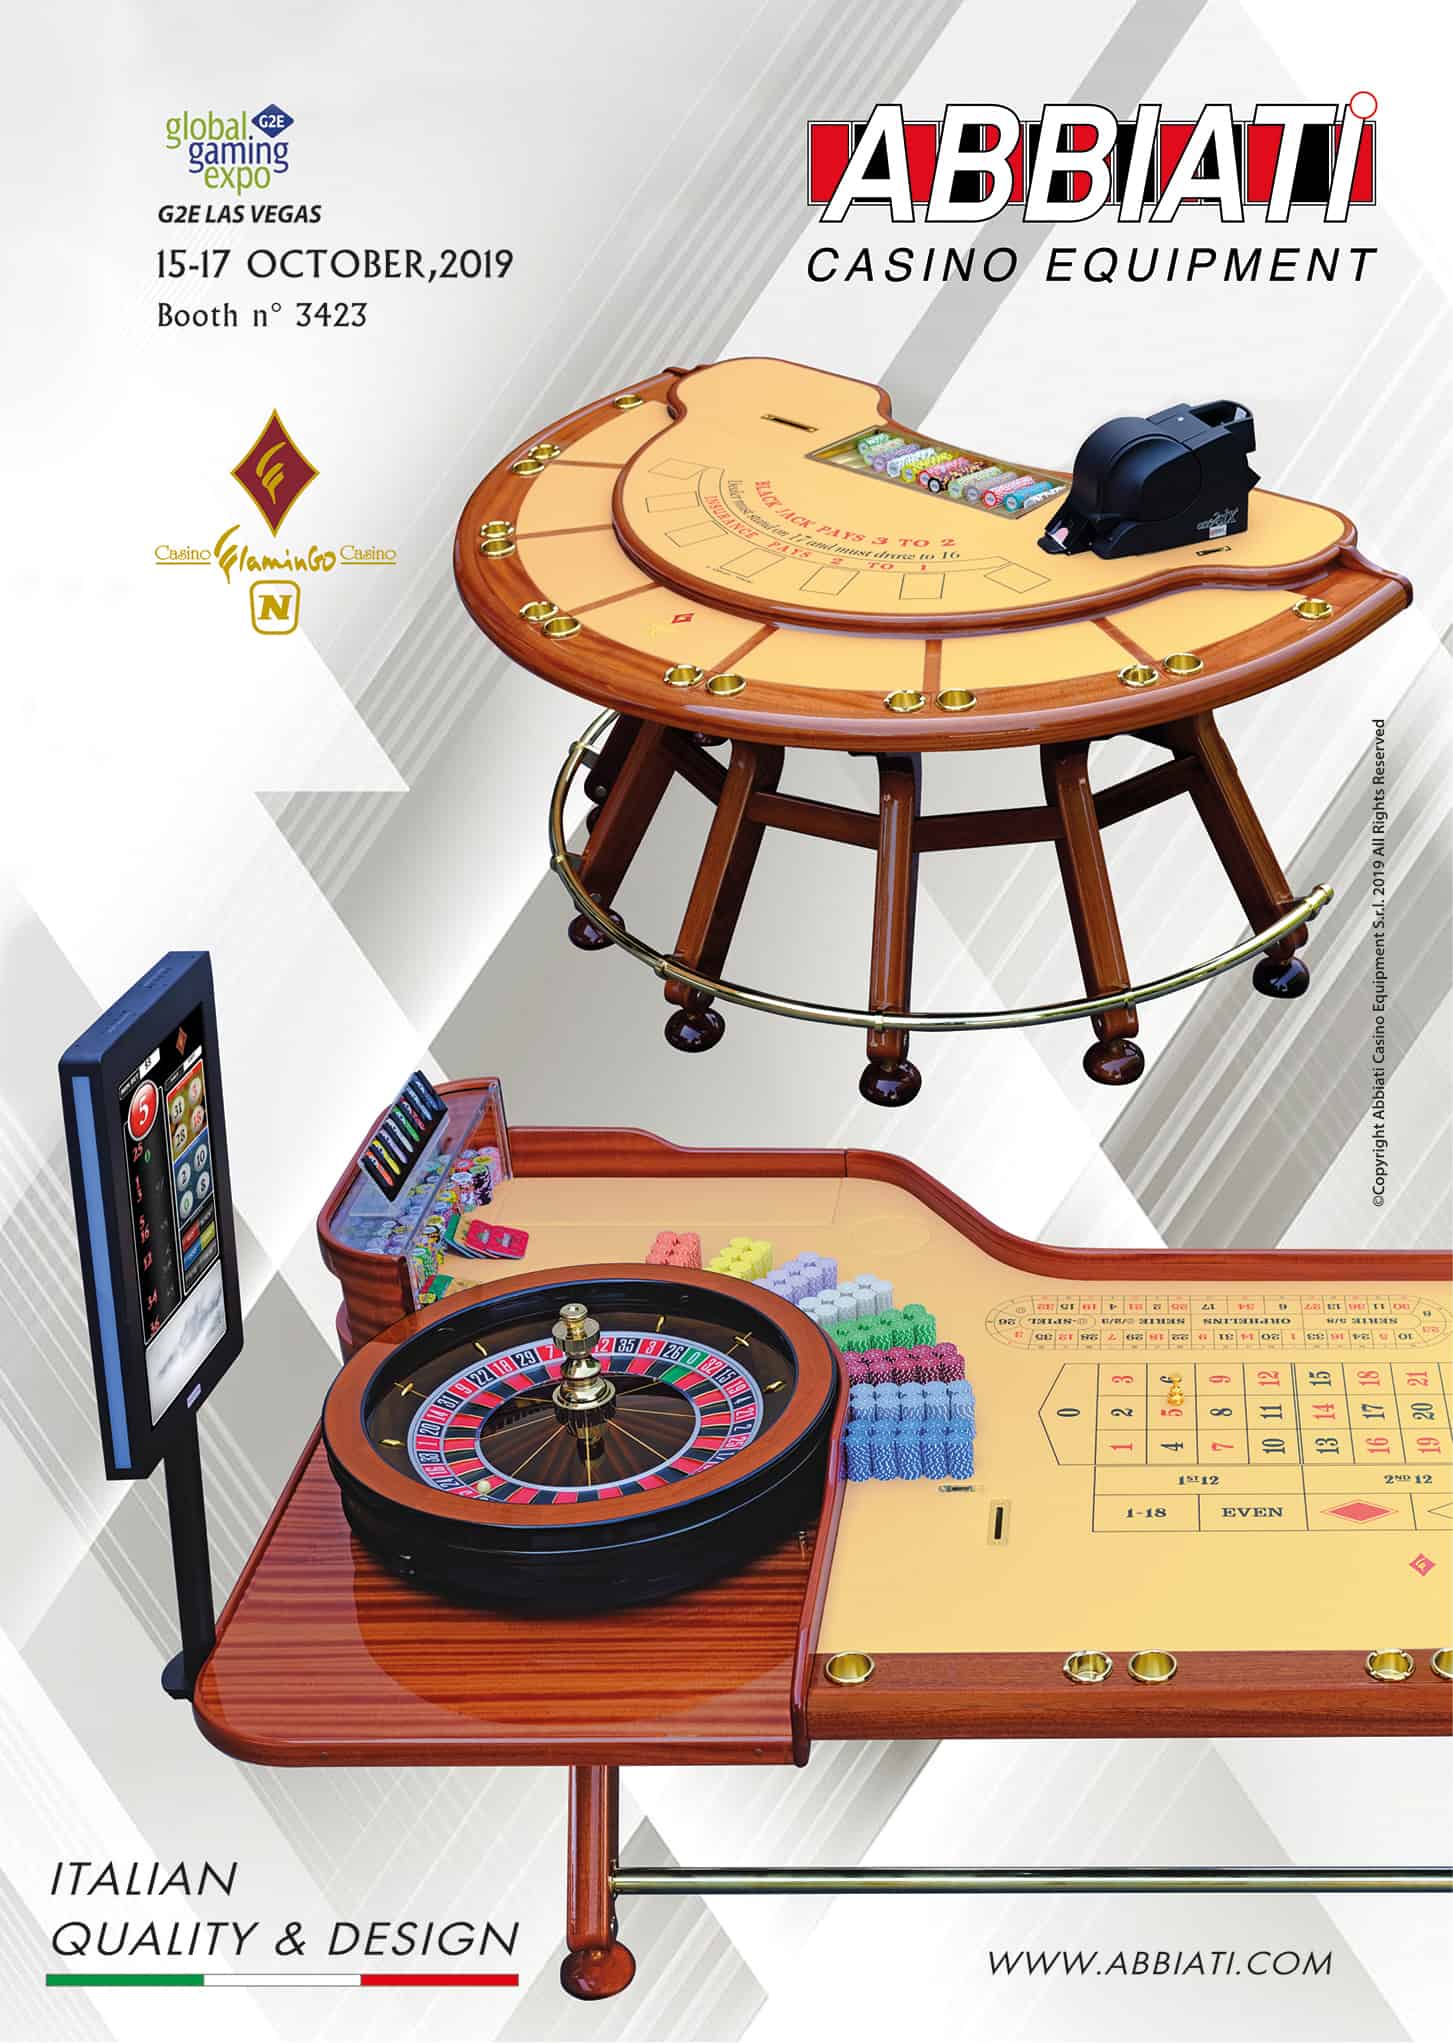 casino review advertisement september 2019